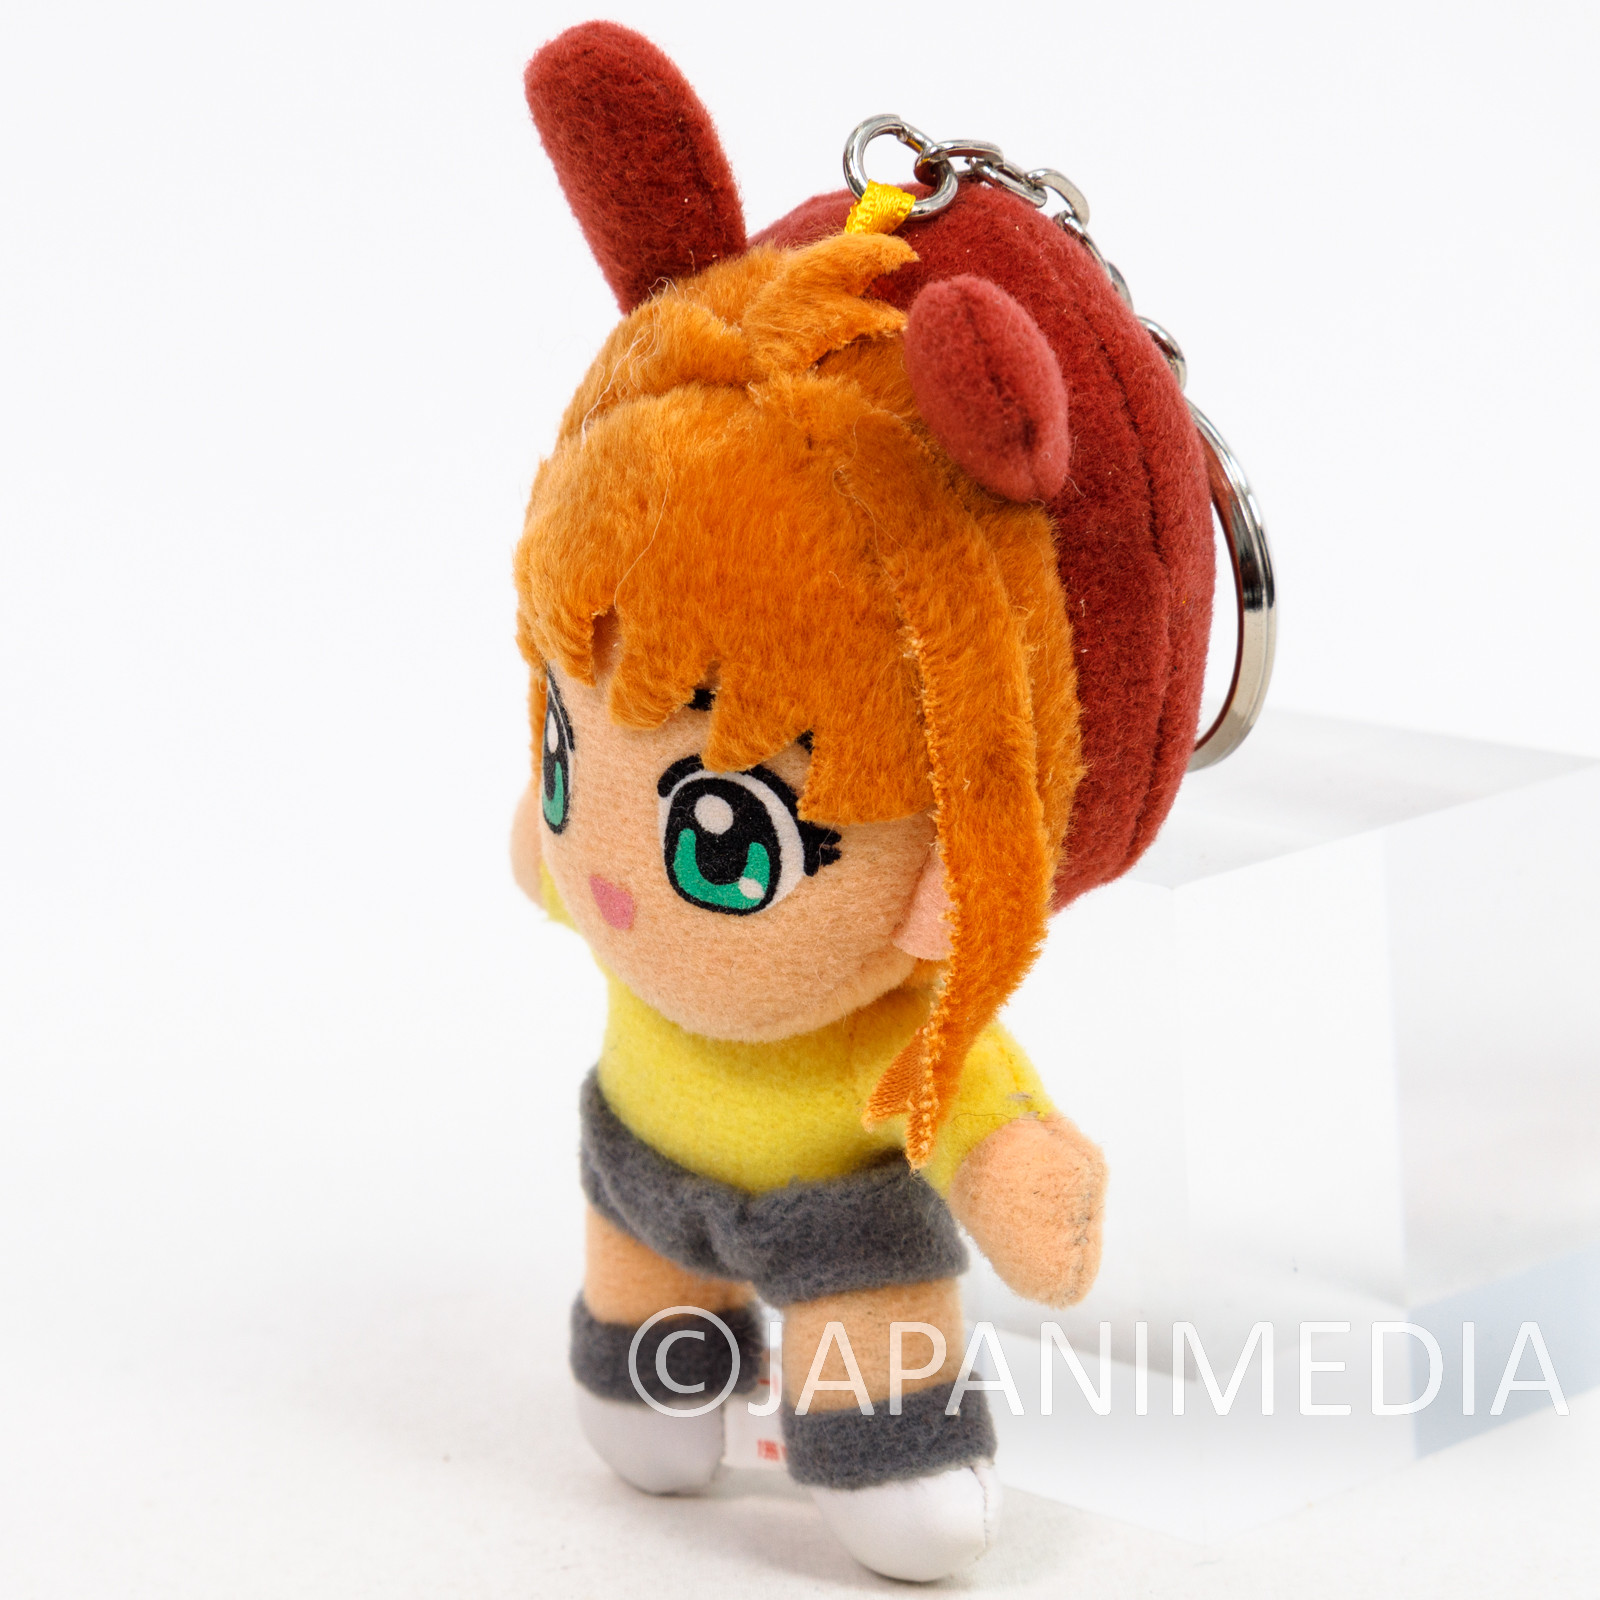 Cardcaptor Sakura Plush Doll Keychain #5 BANPRESTO